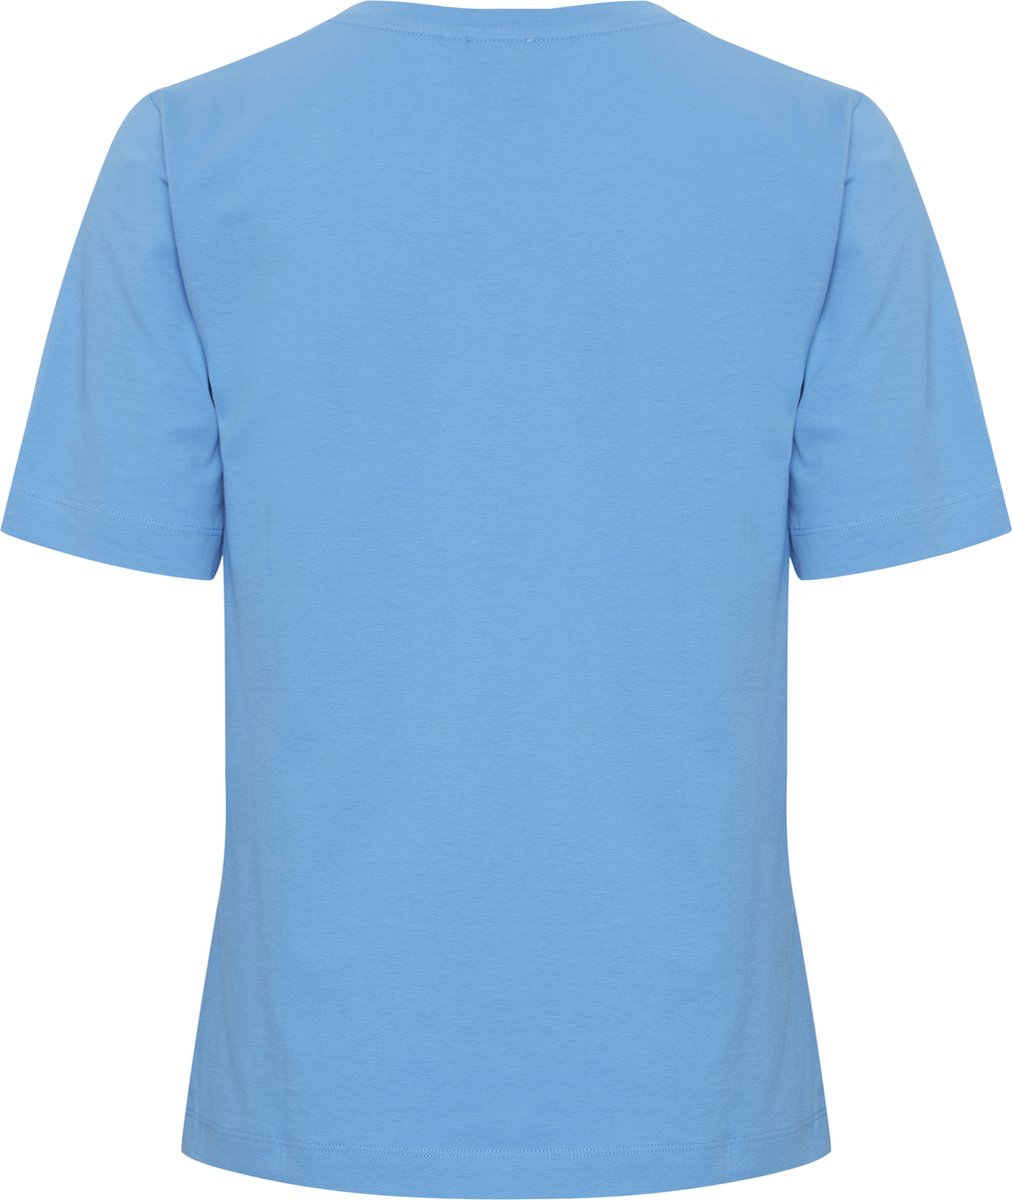 The Jogg Concept JCSIMONA LOGO TSHIRT Dames T-shirt - Maat M